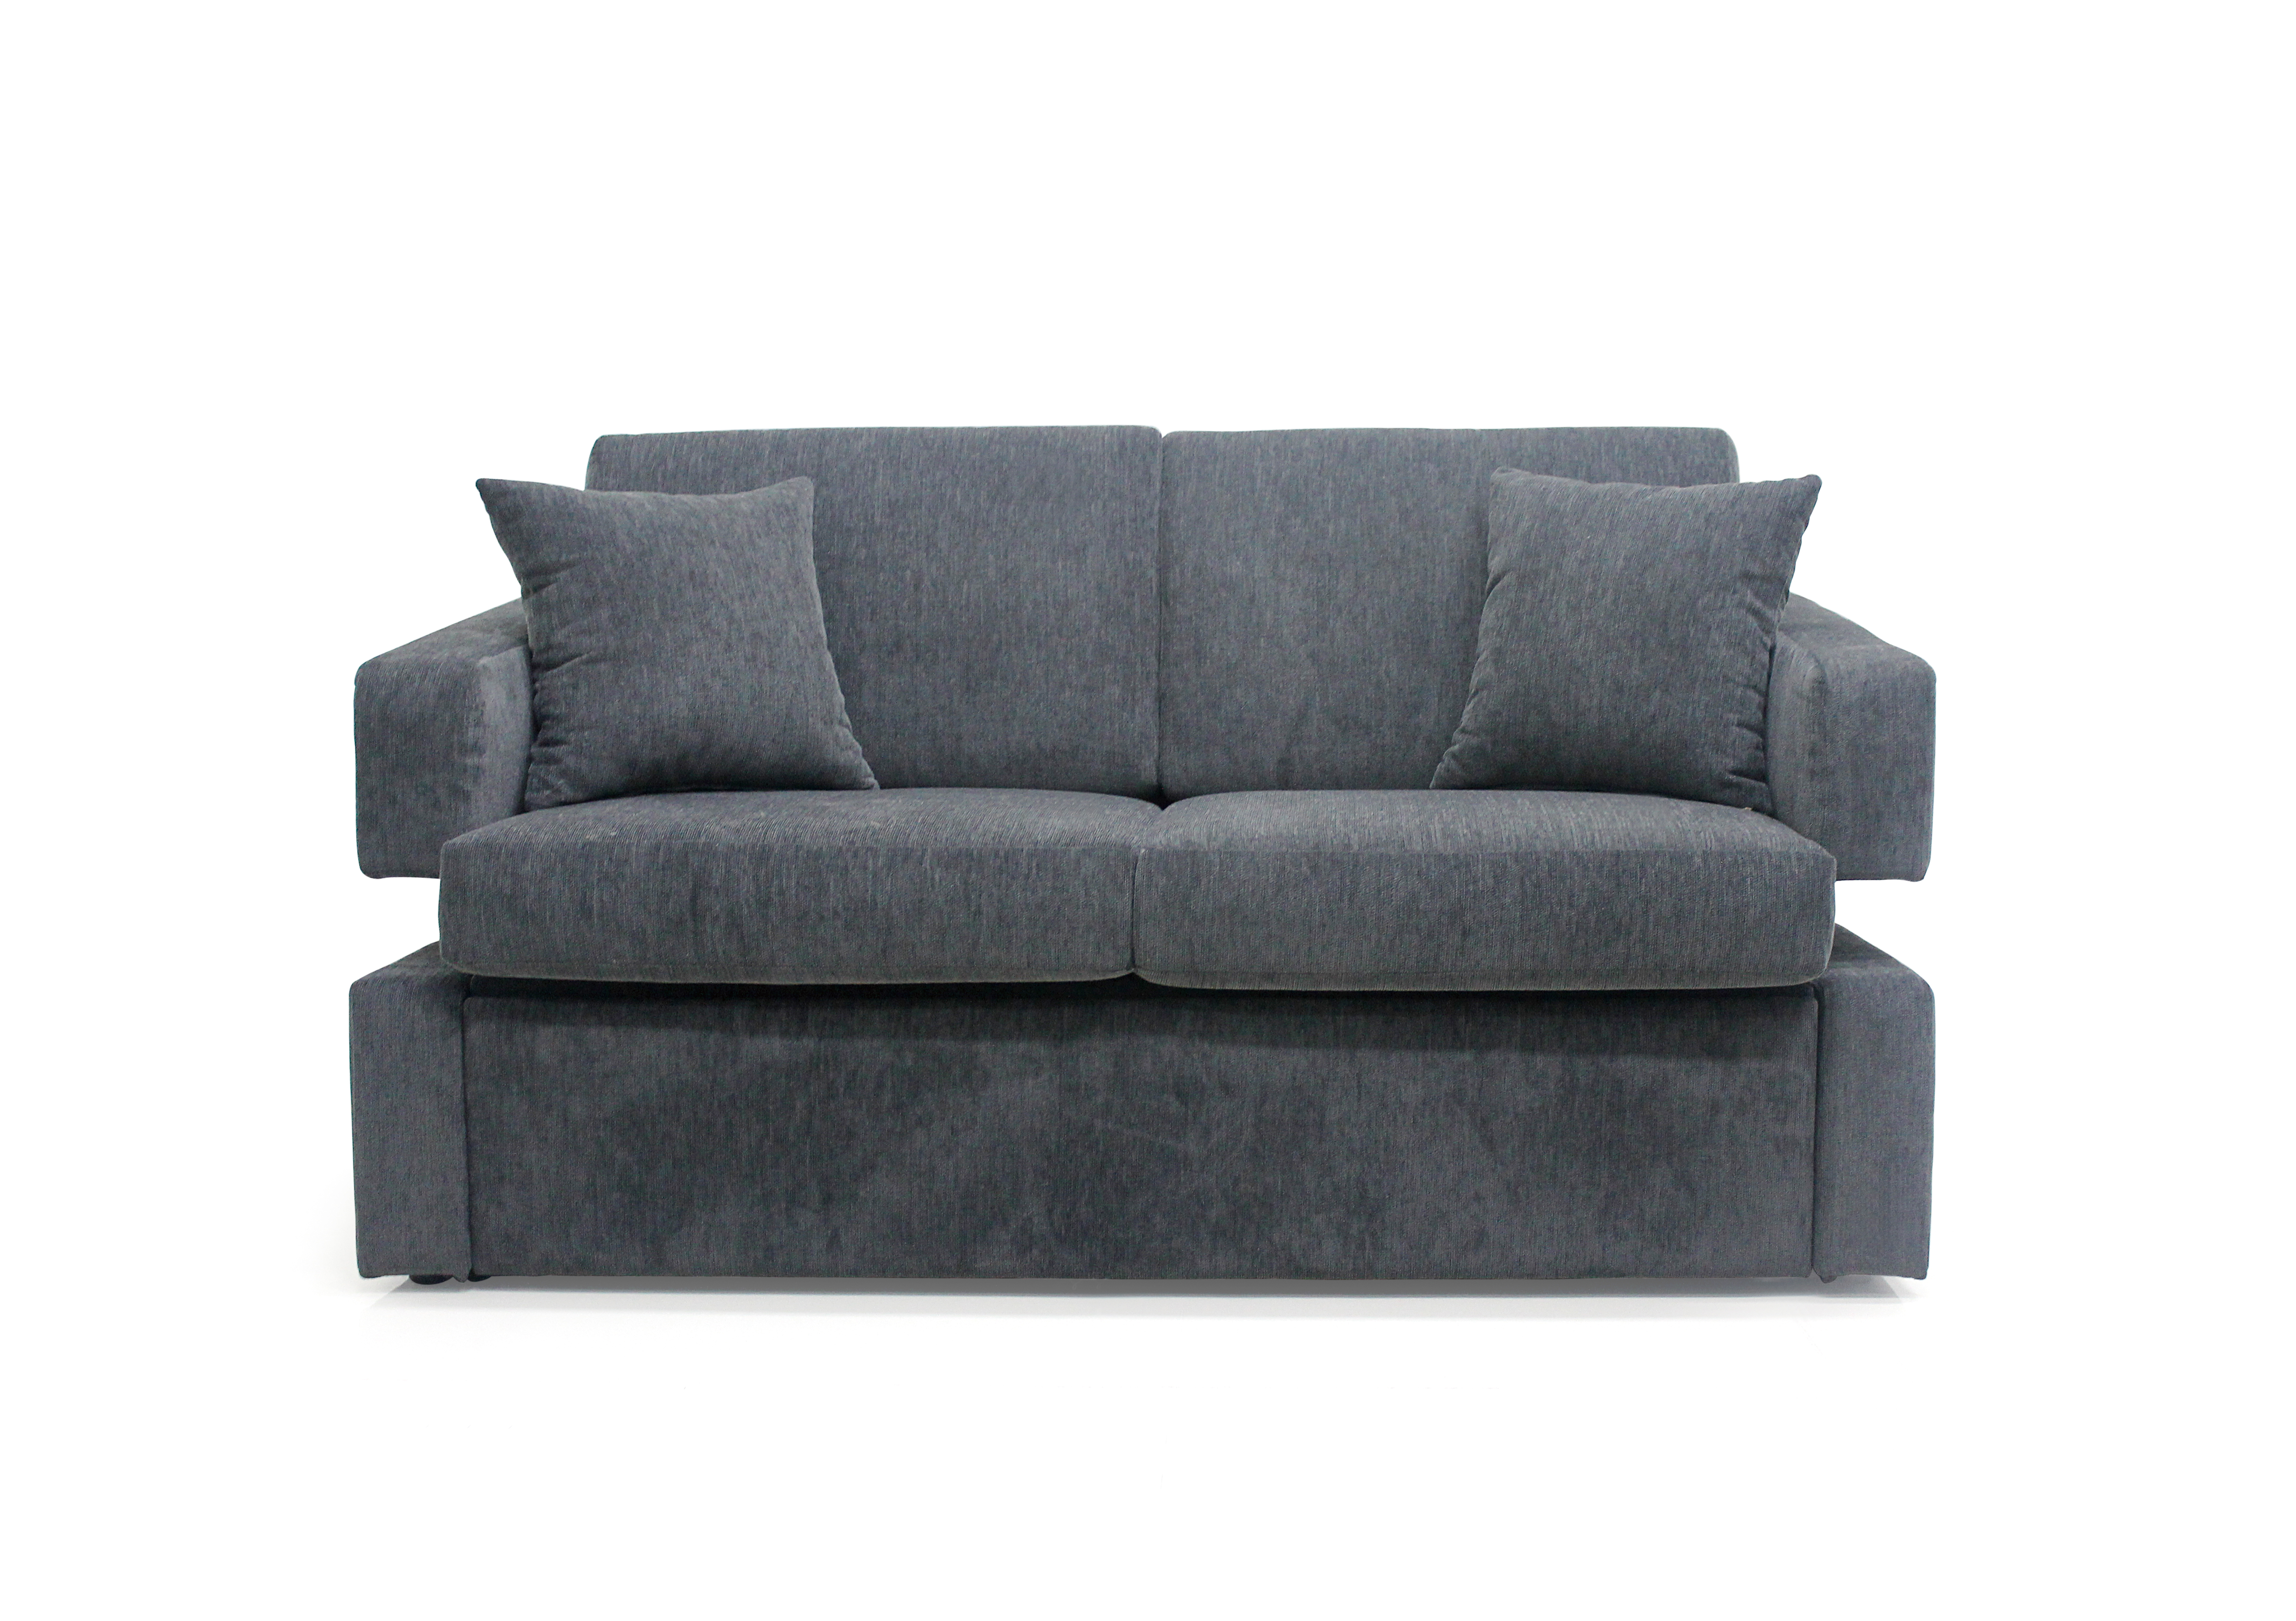 sb furniture sofa bed